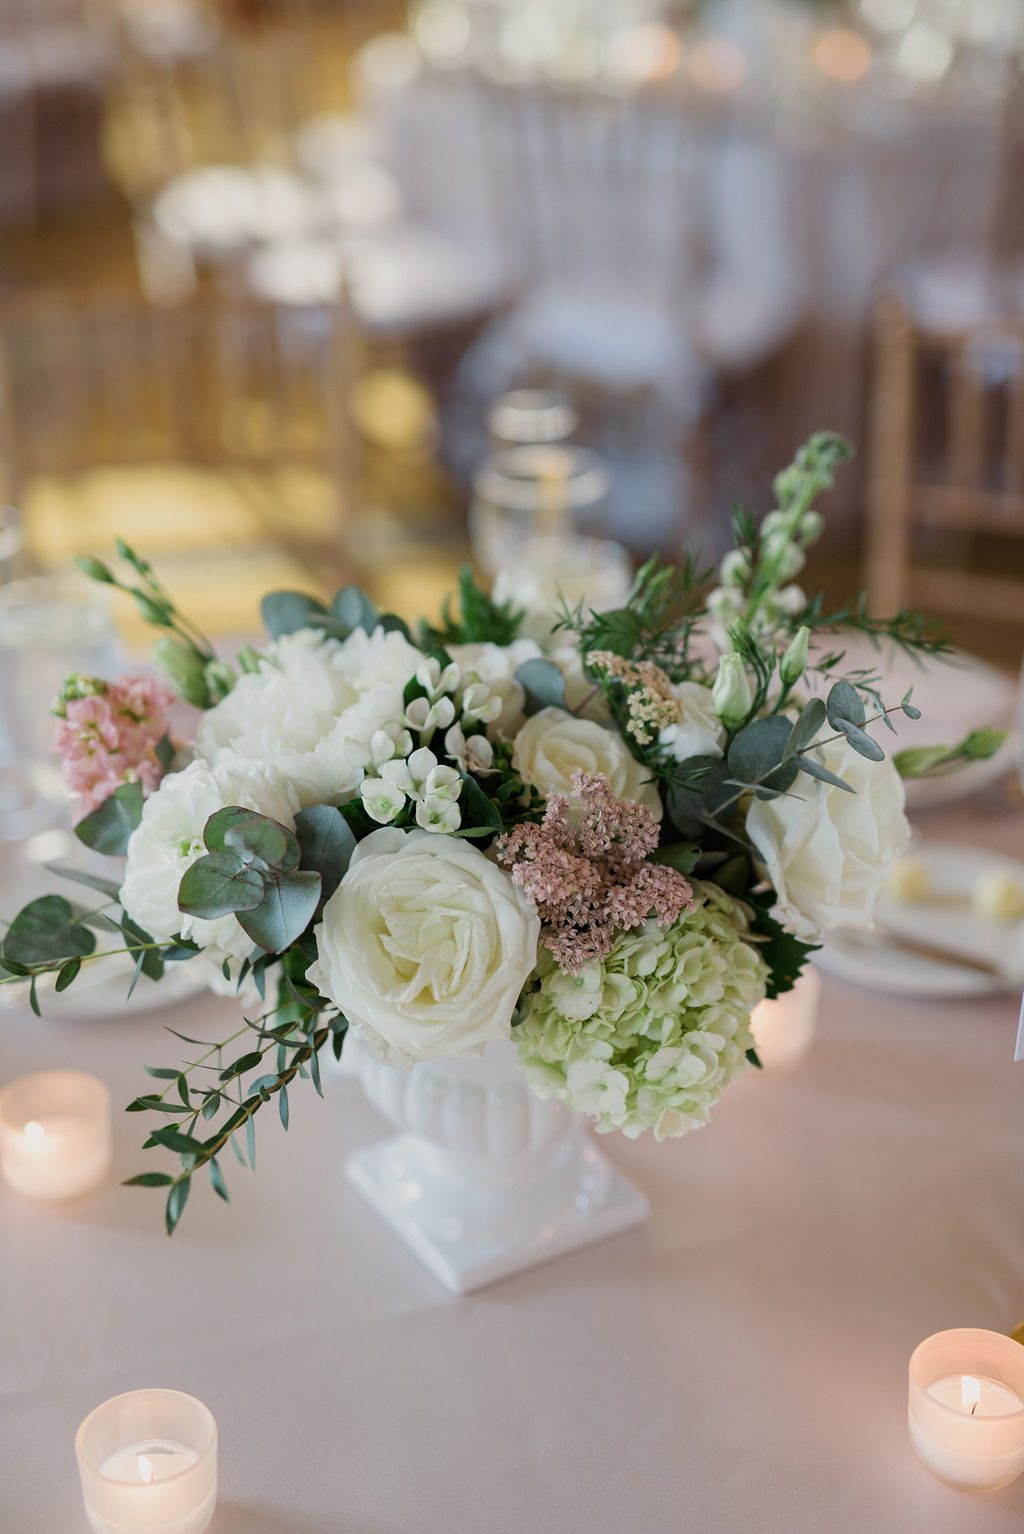 omni parker house wedding floral inspiration for reception centerpiece